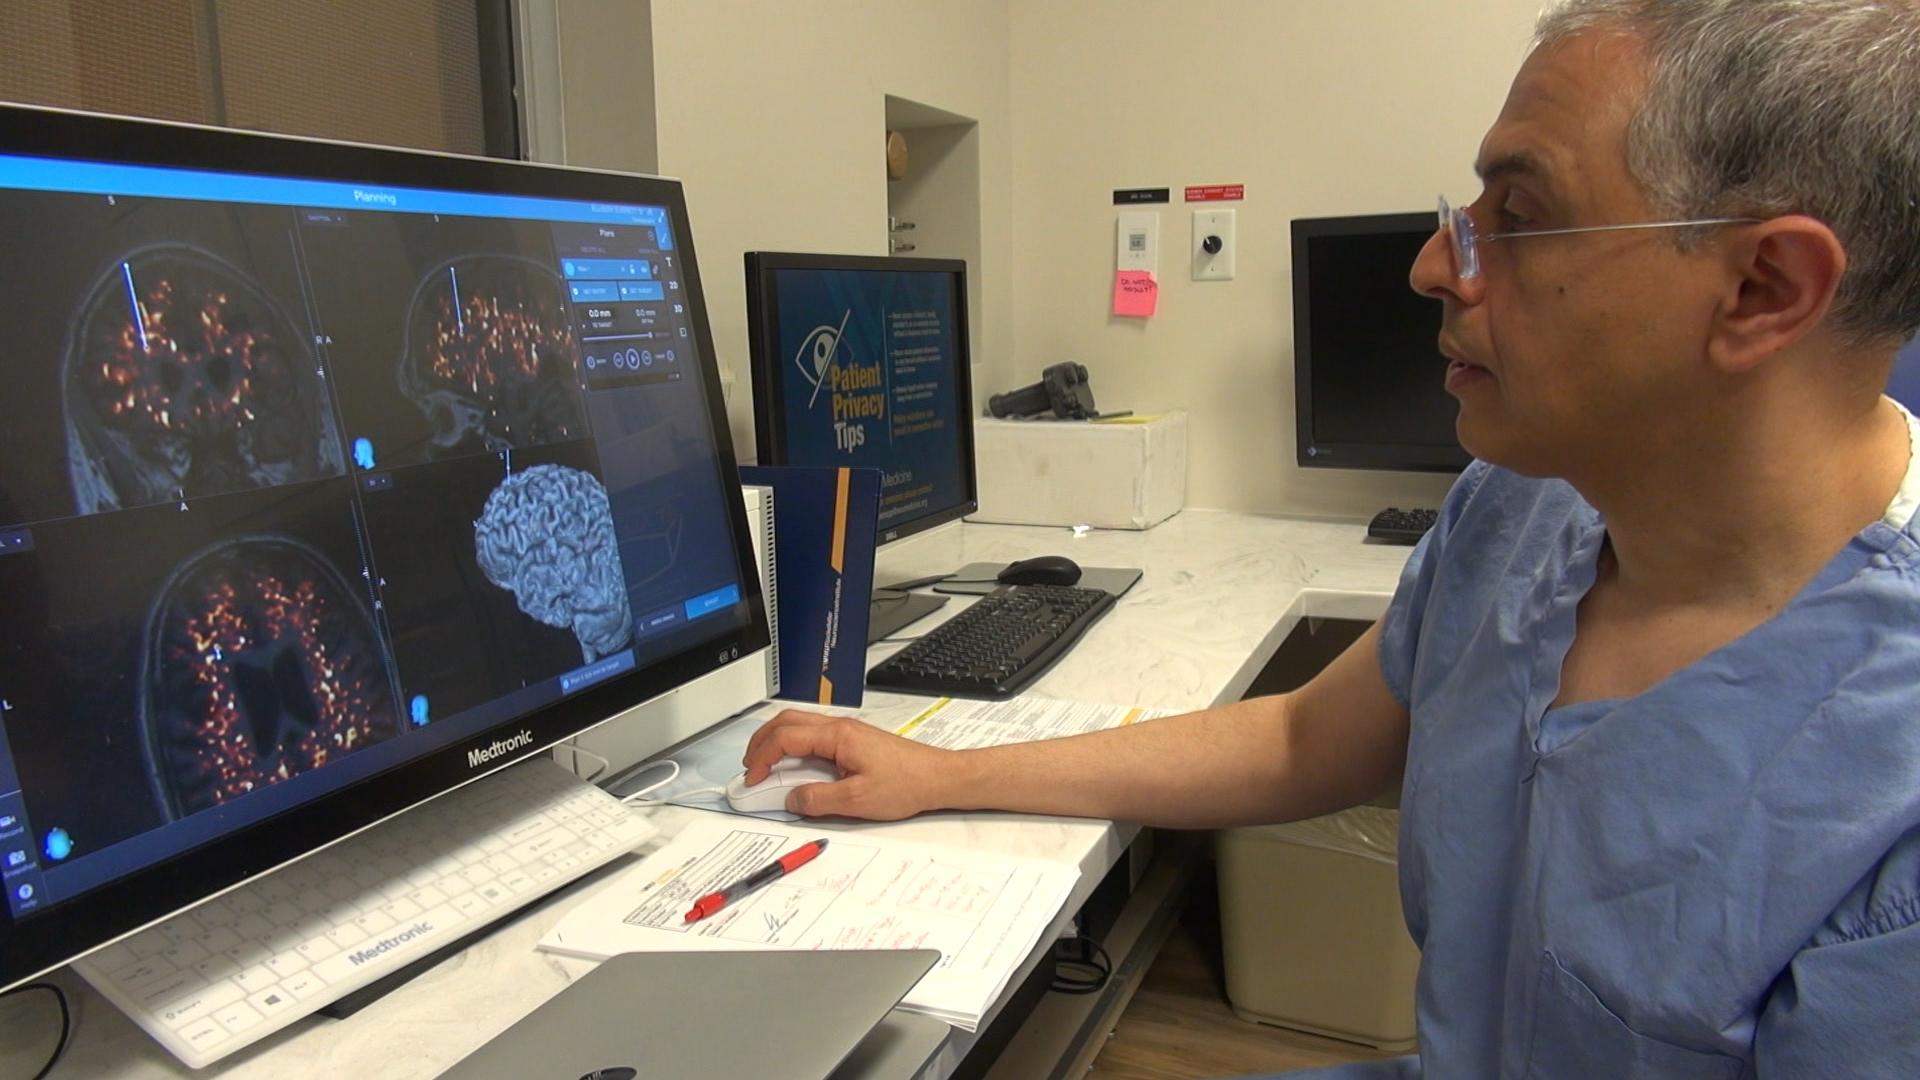 neurosurgeon works to treat alzheimer's, addiction with ultrasound technology